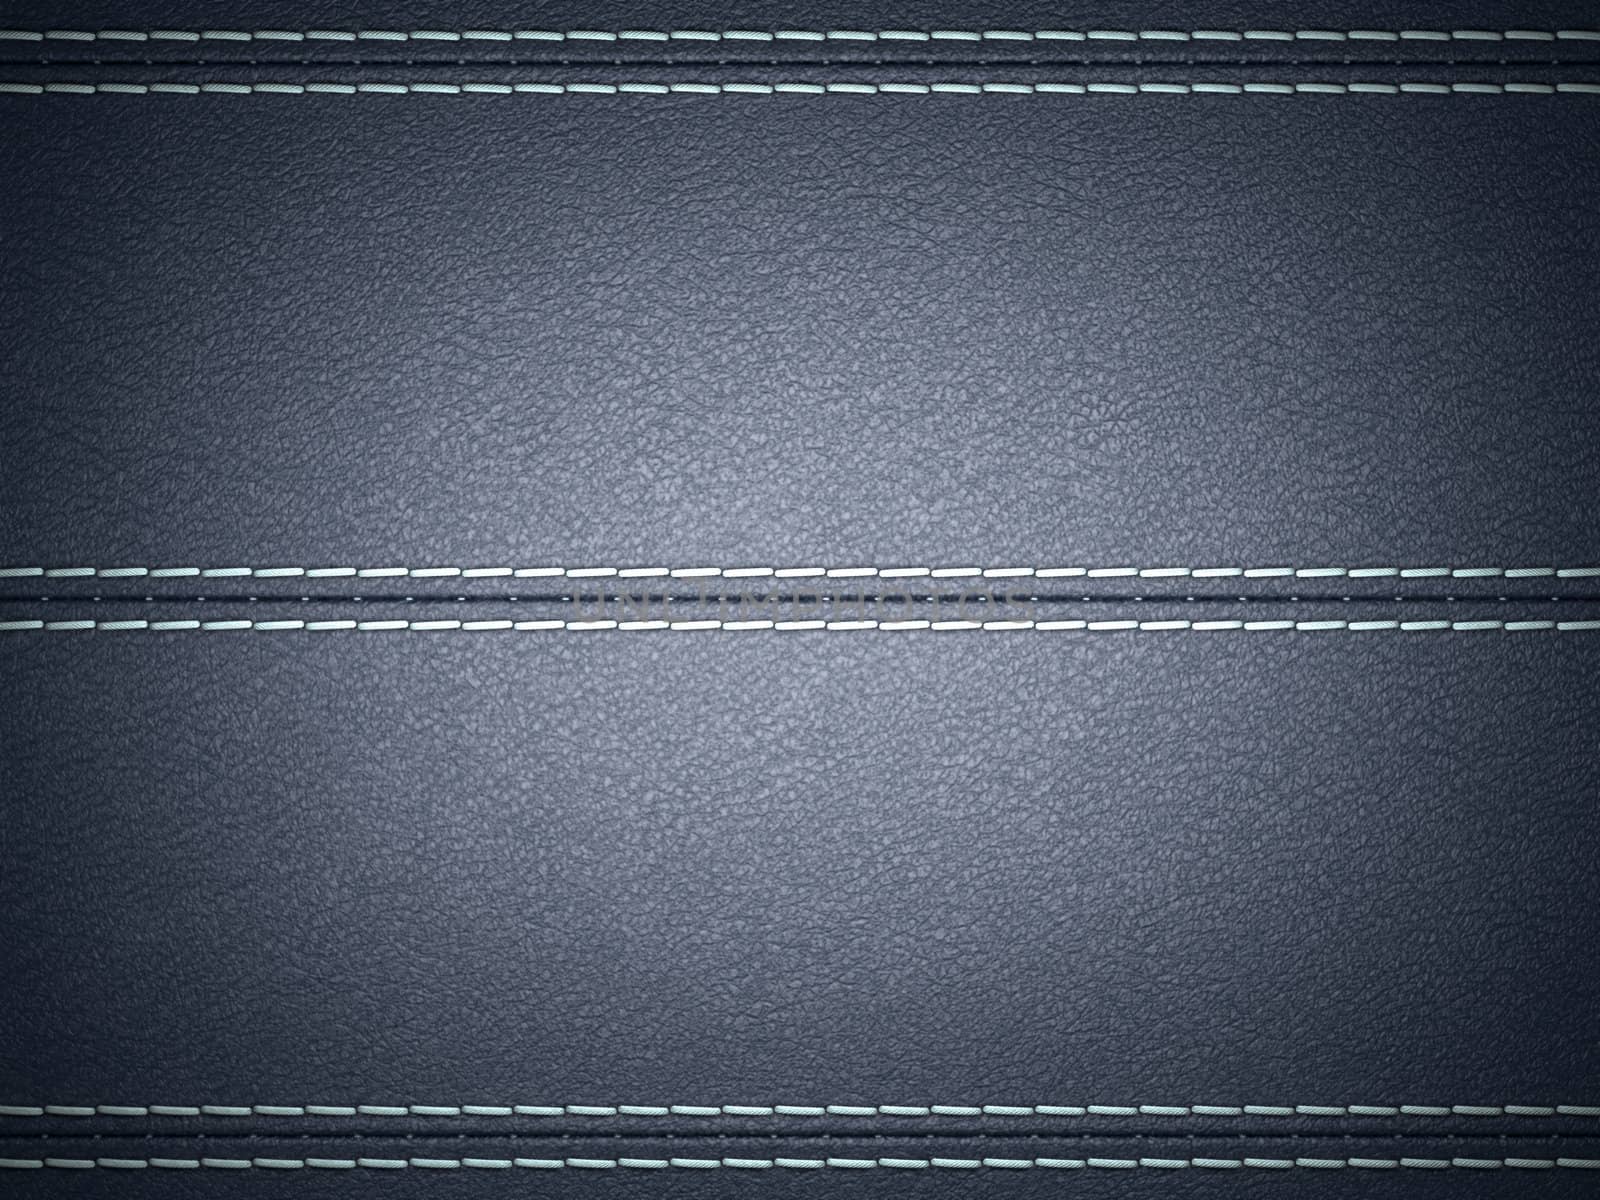 Dark Blue horizontal stitched leather background by Arsgera